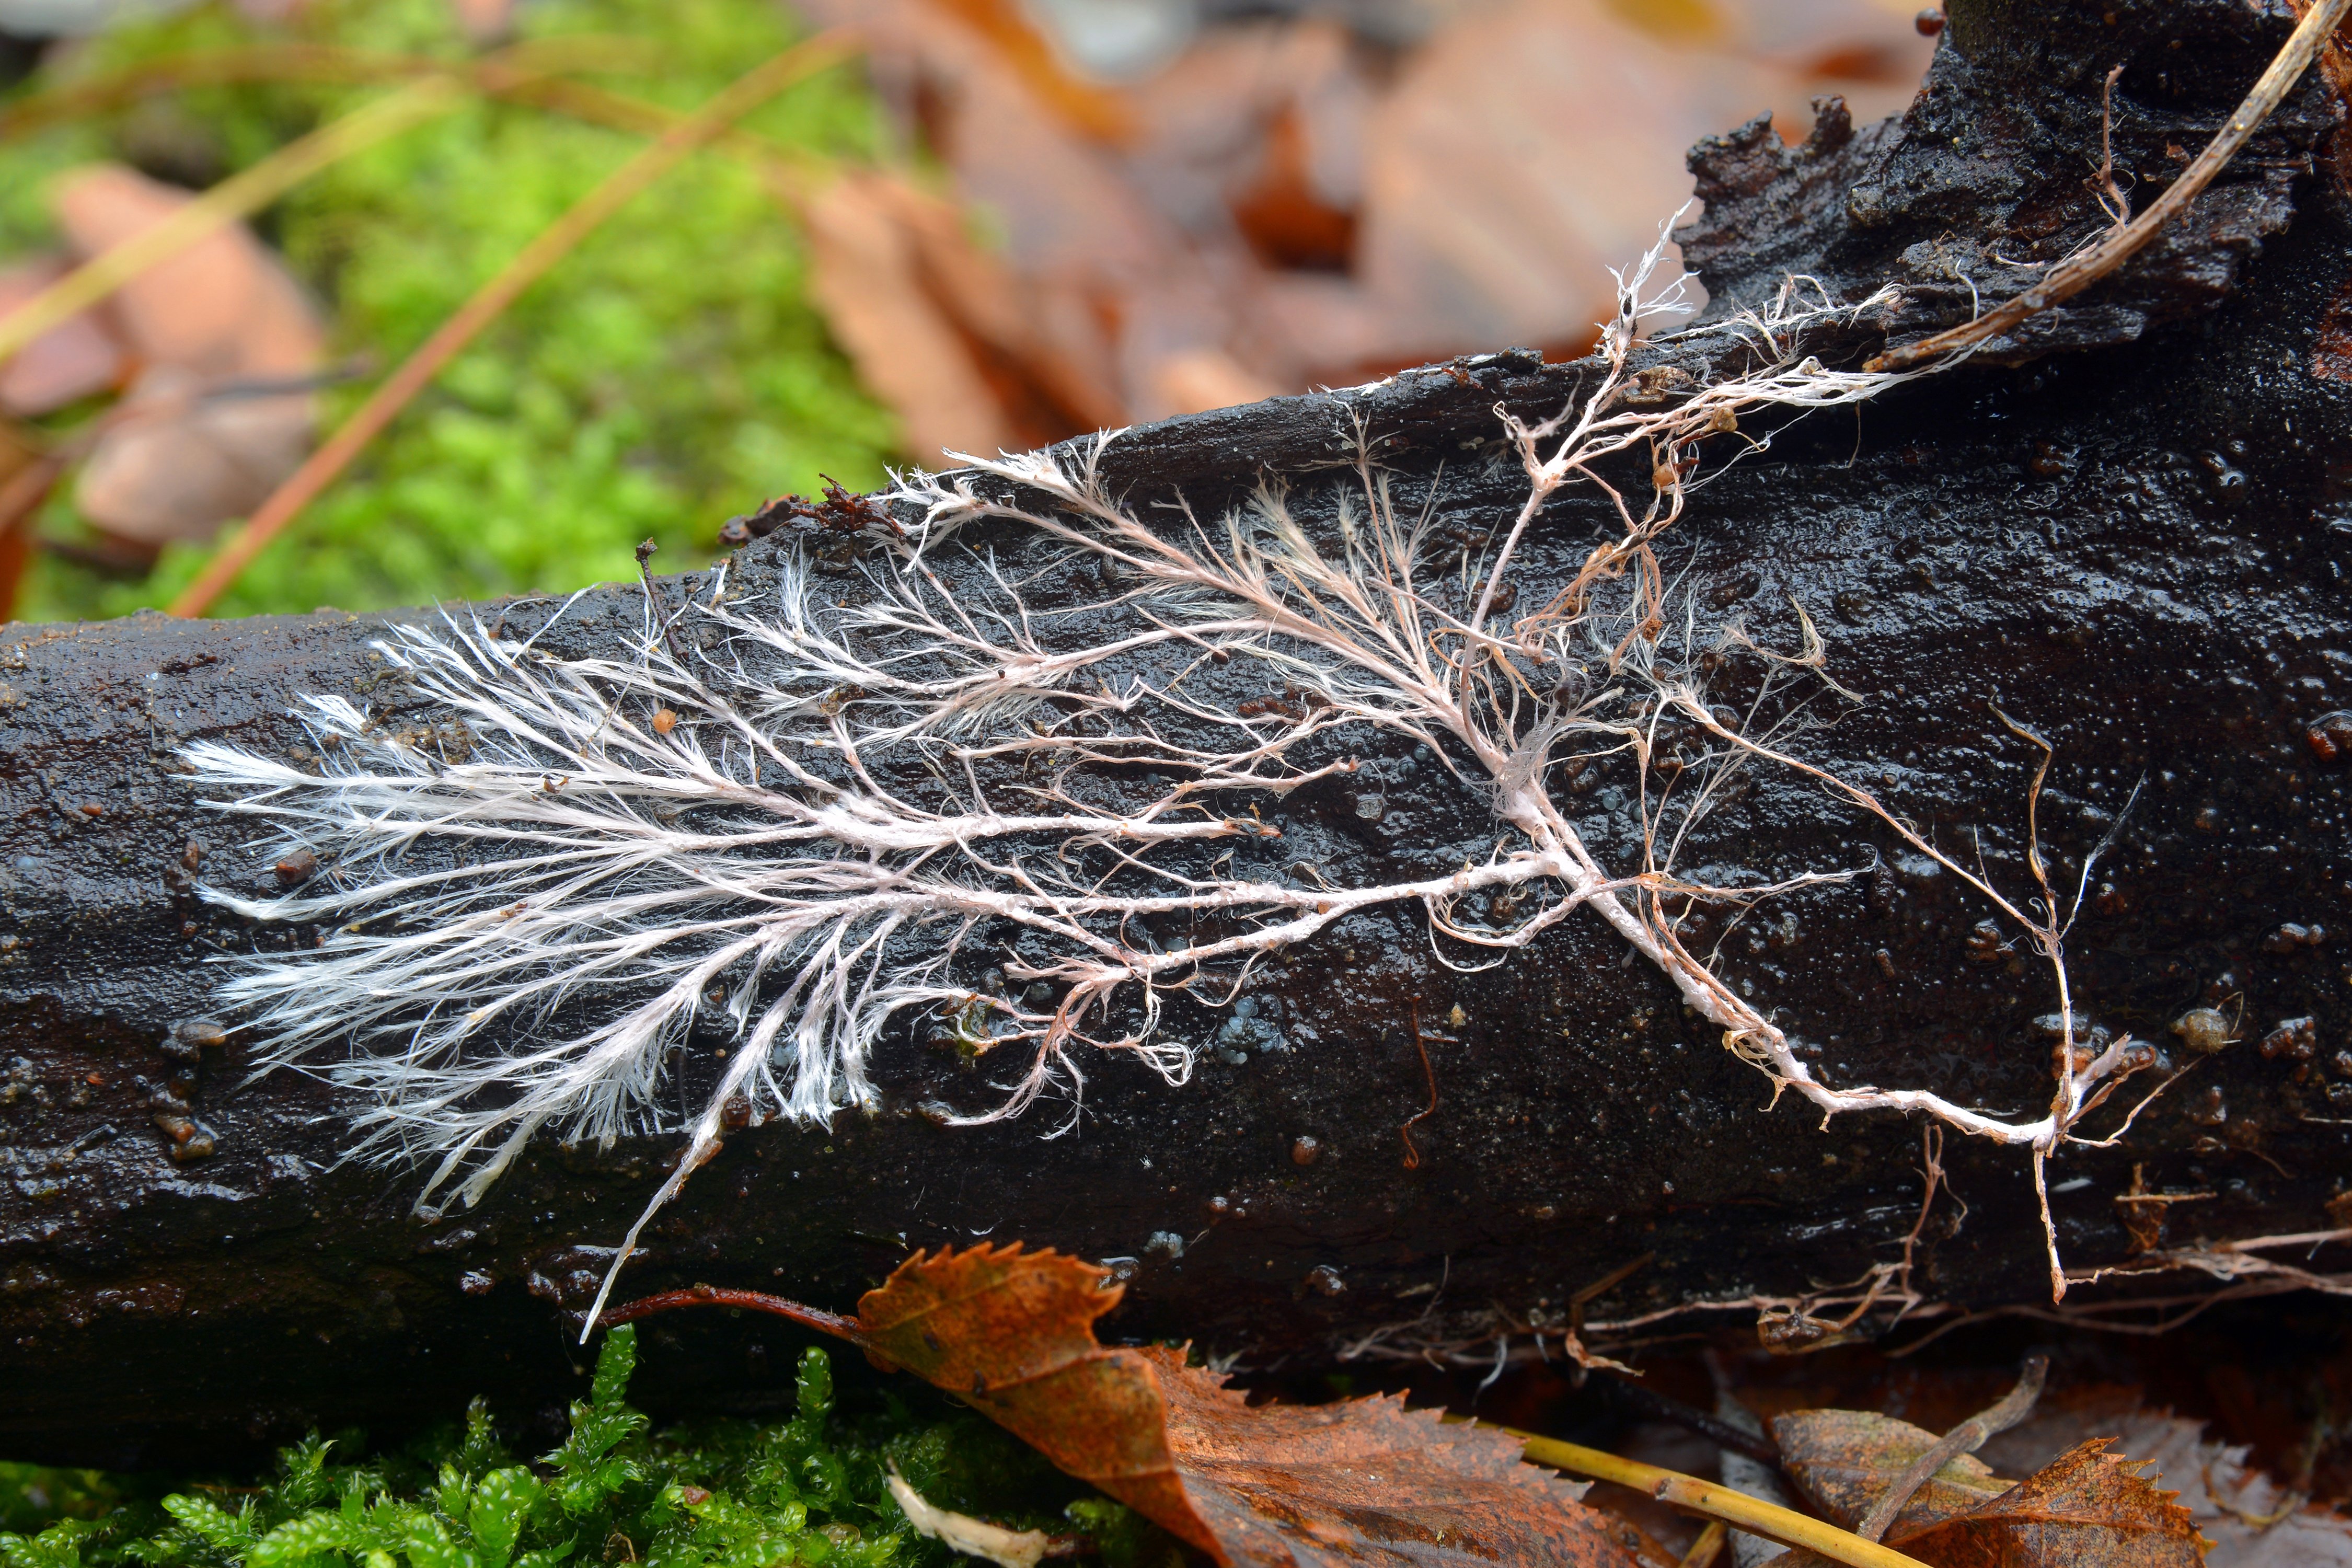 How mycelium helps a forest ecosystem communicate underground